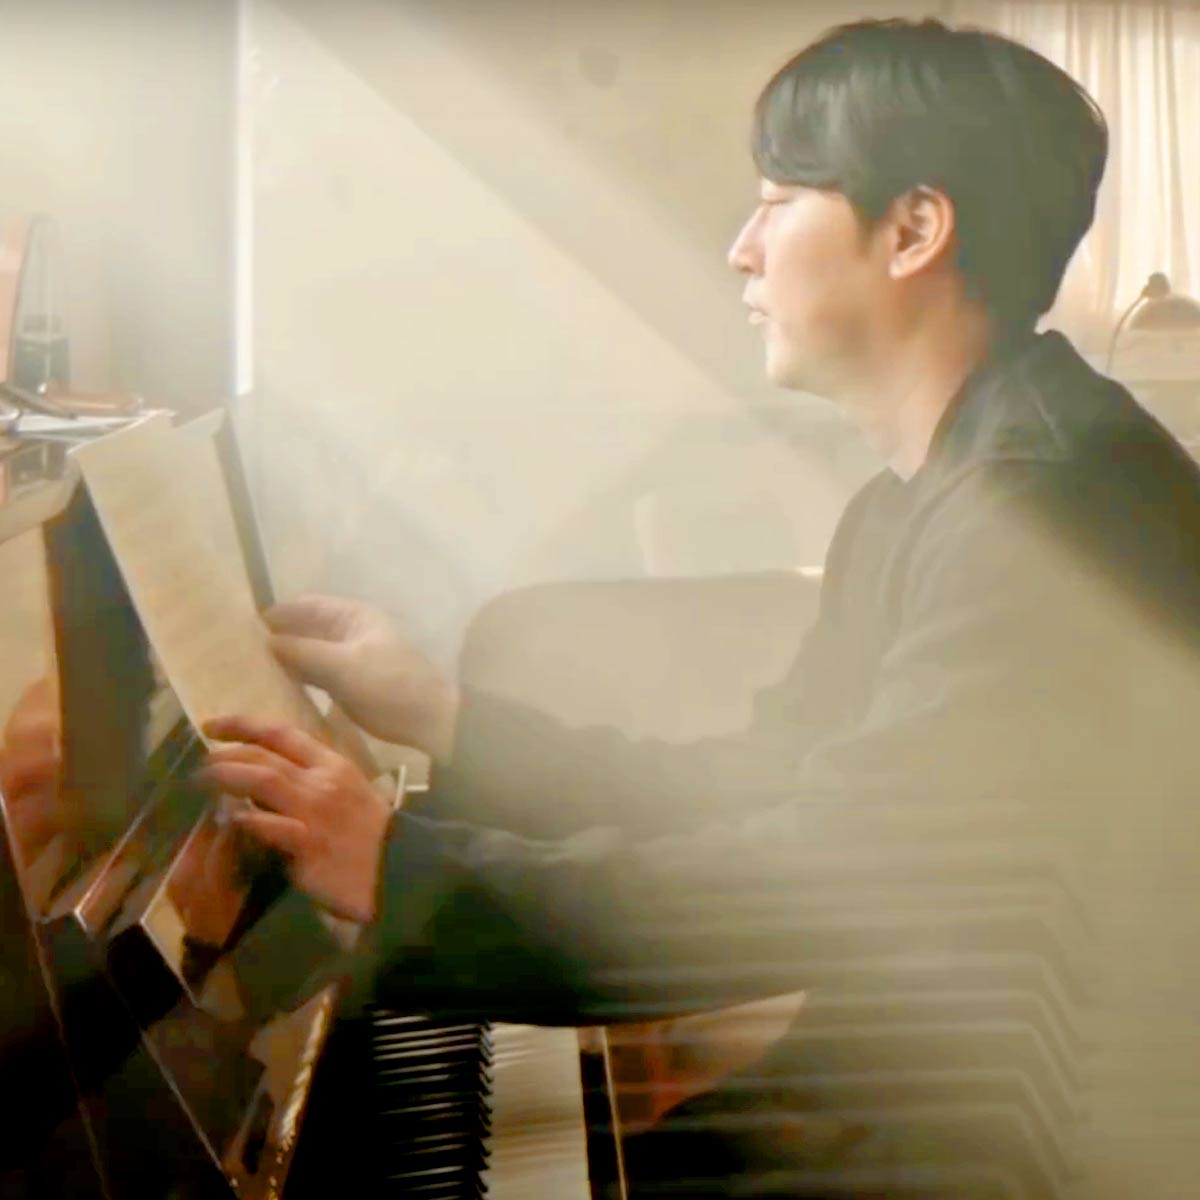 Play May Be By Yiruma Piano Music Sheet On Virtual Piano - your reality roblox piano sheet music